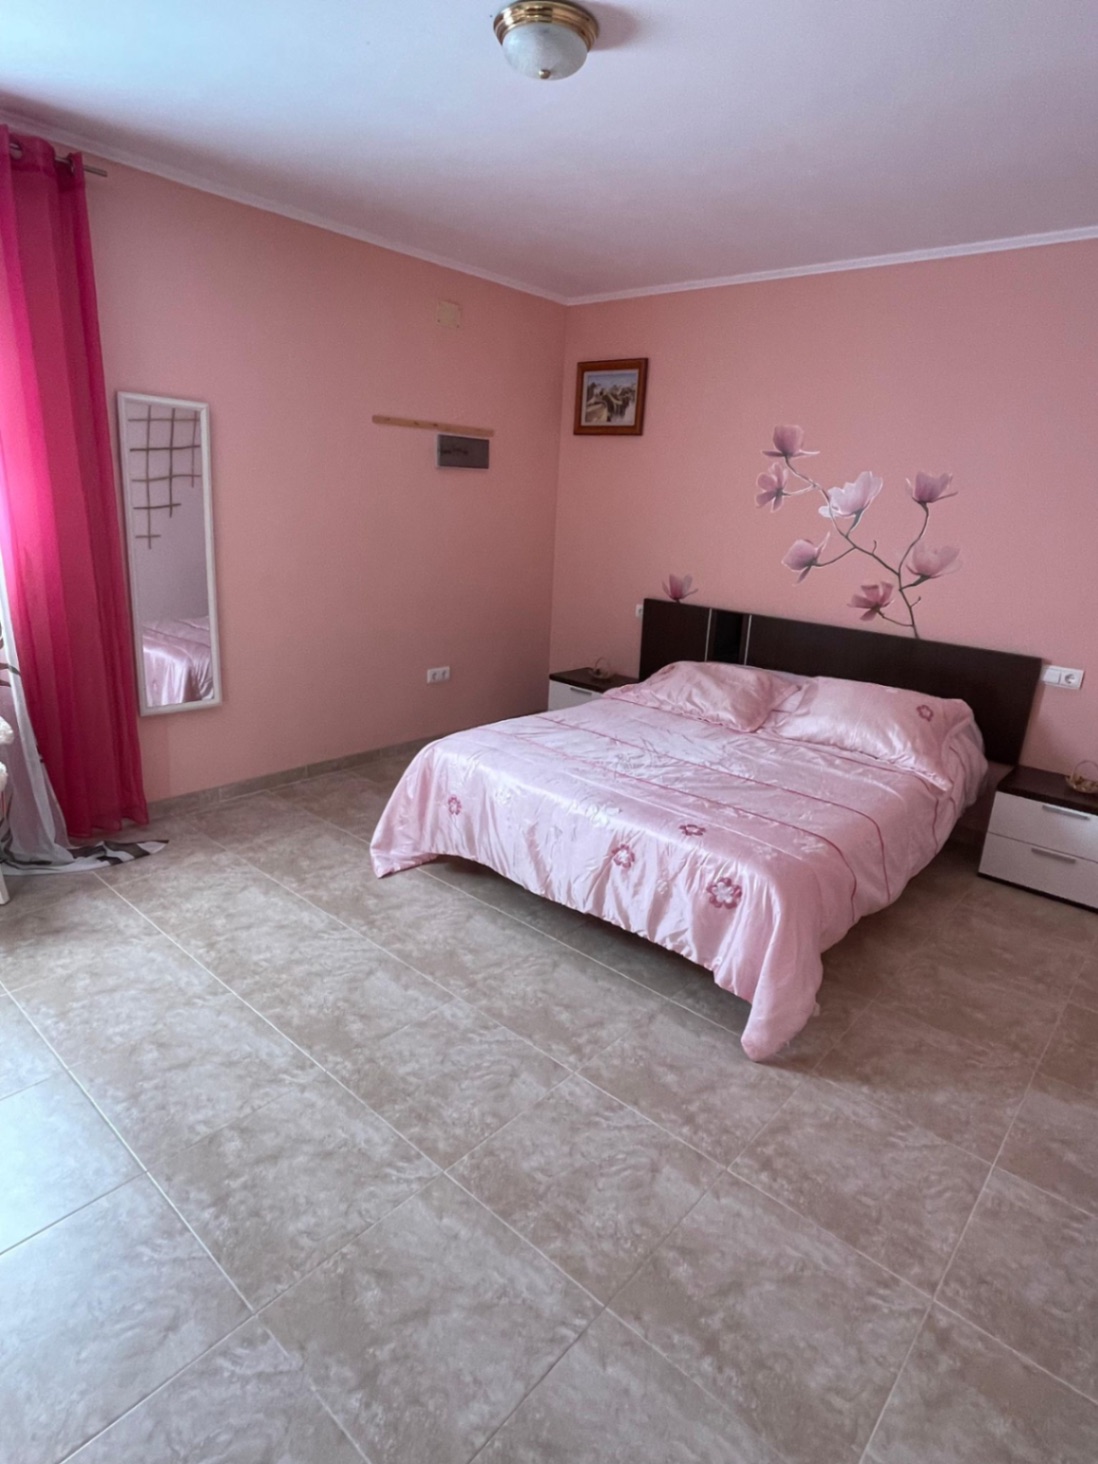 Detached house for rent in Partida Garduix